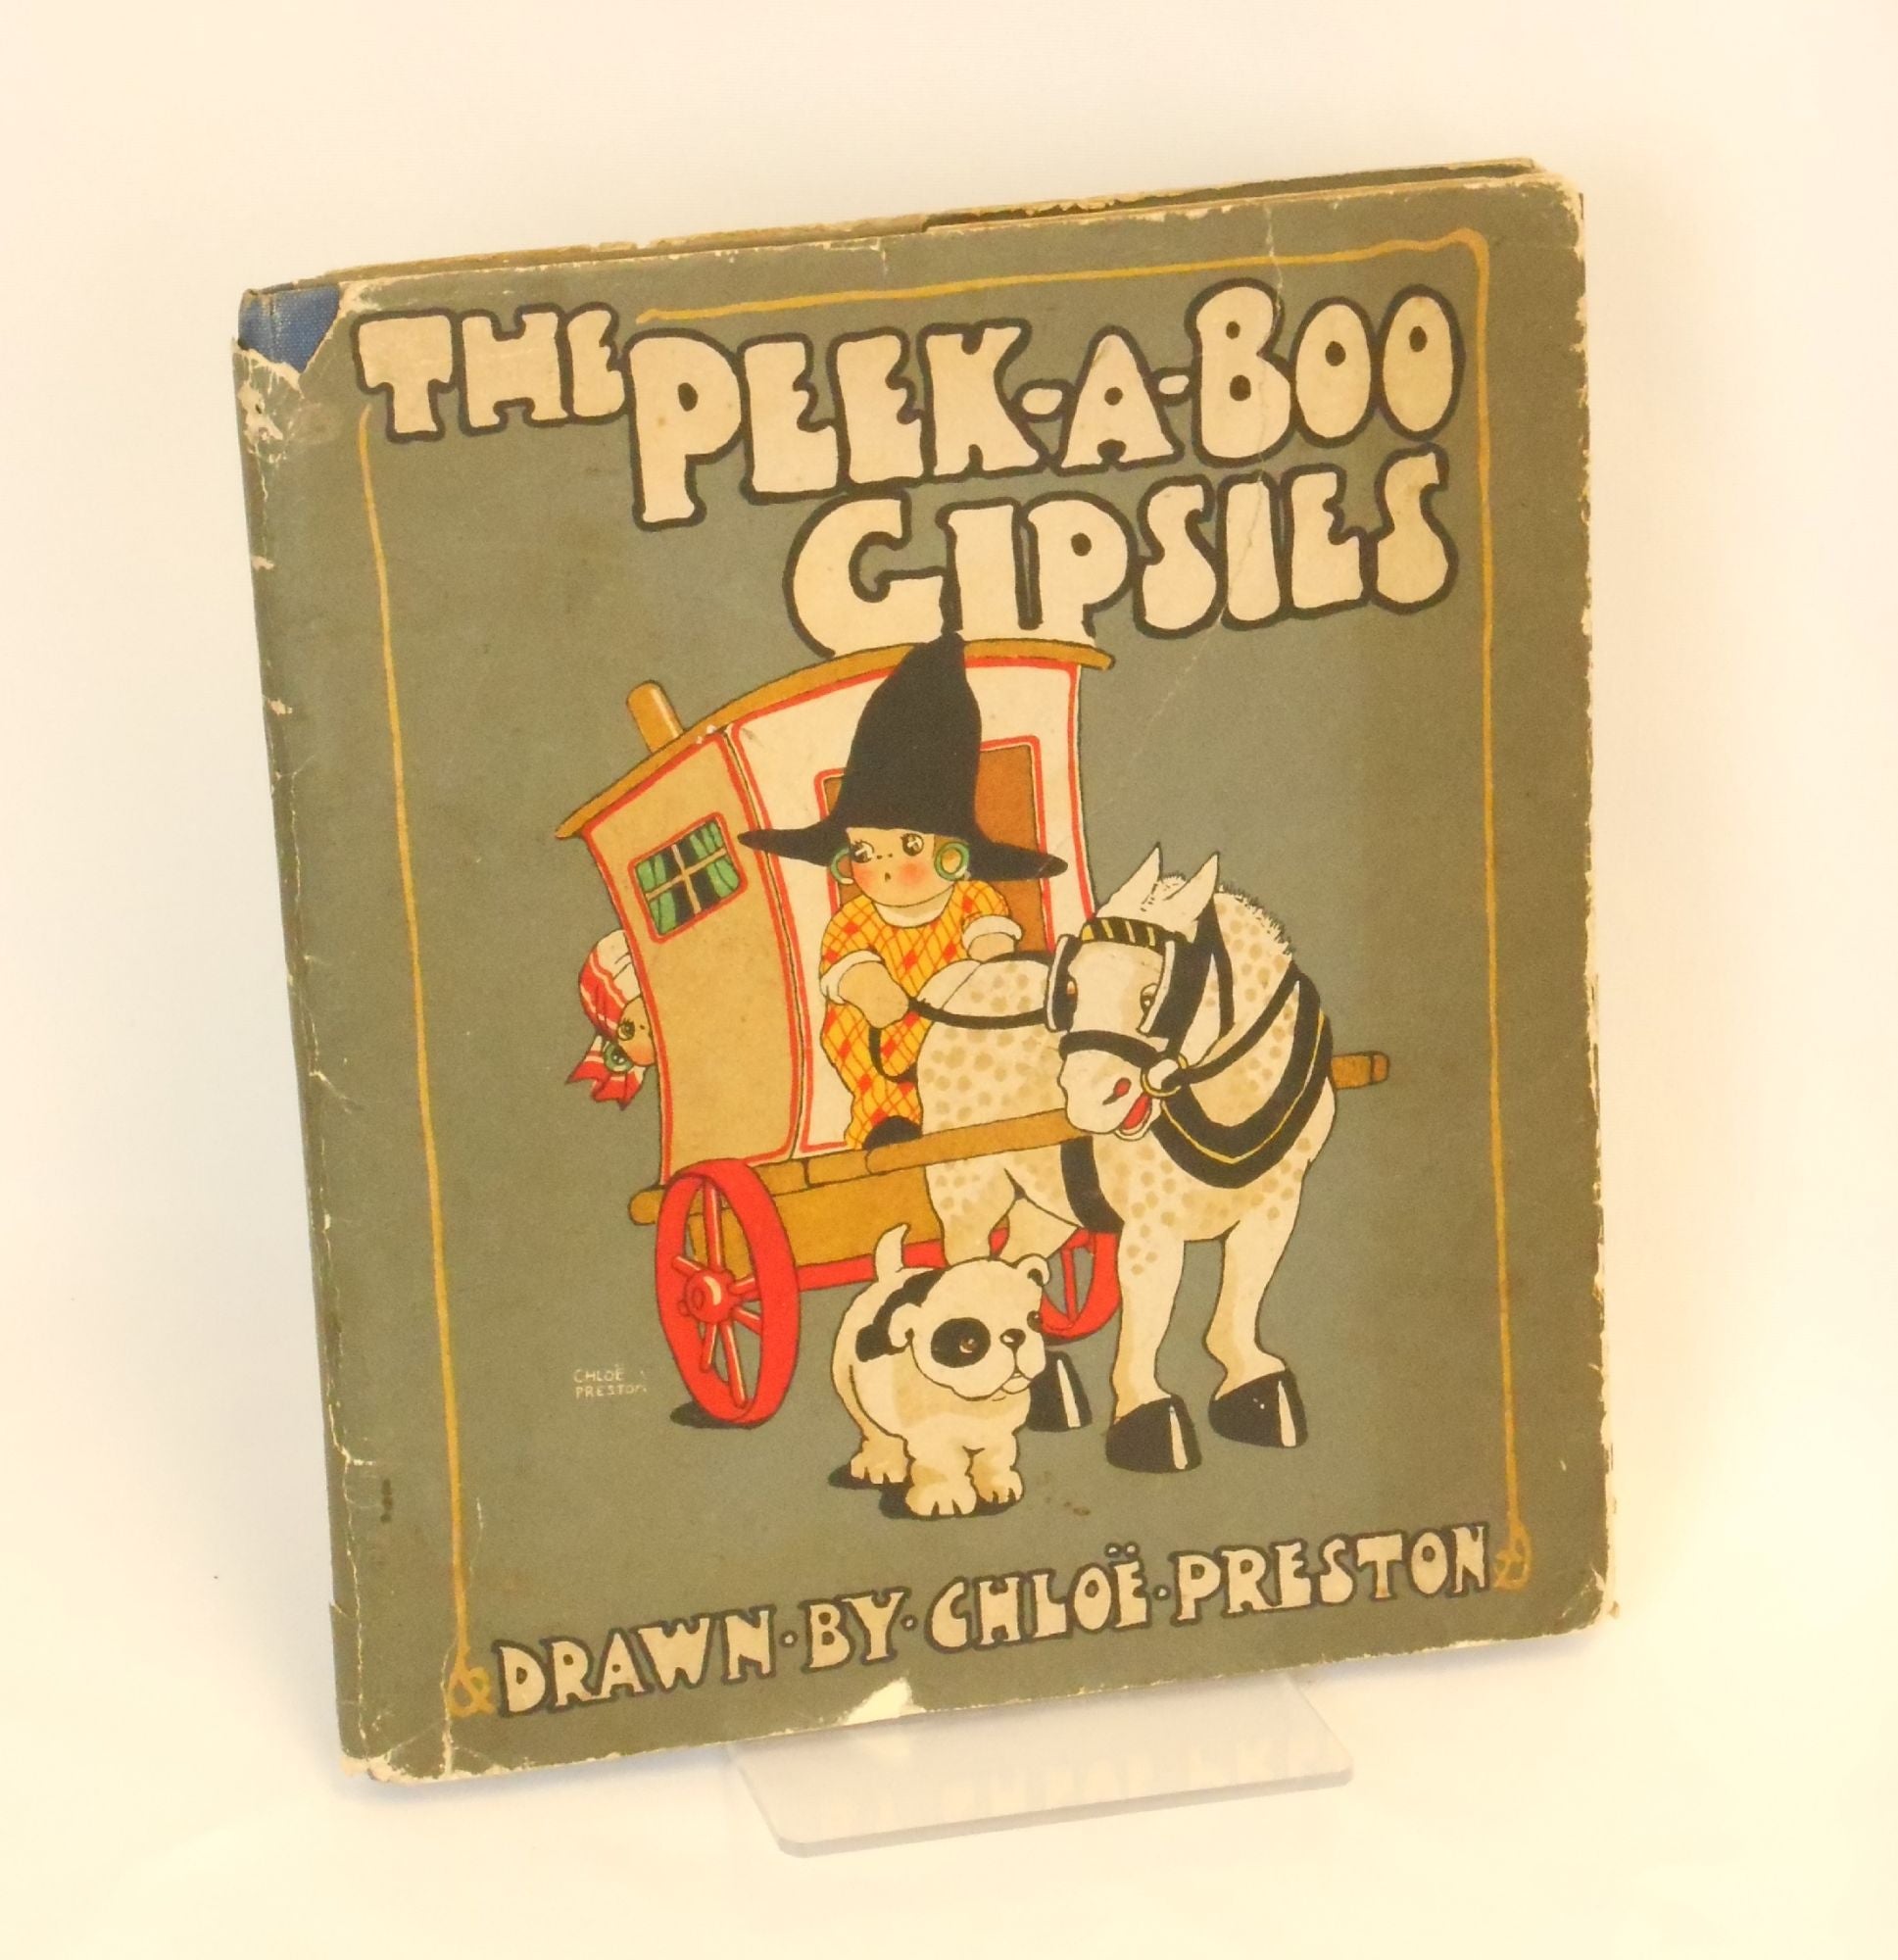 The Peek-A-Boo Gipsies | ron, Chloe Preston, Illustrations